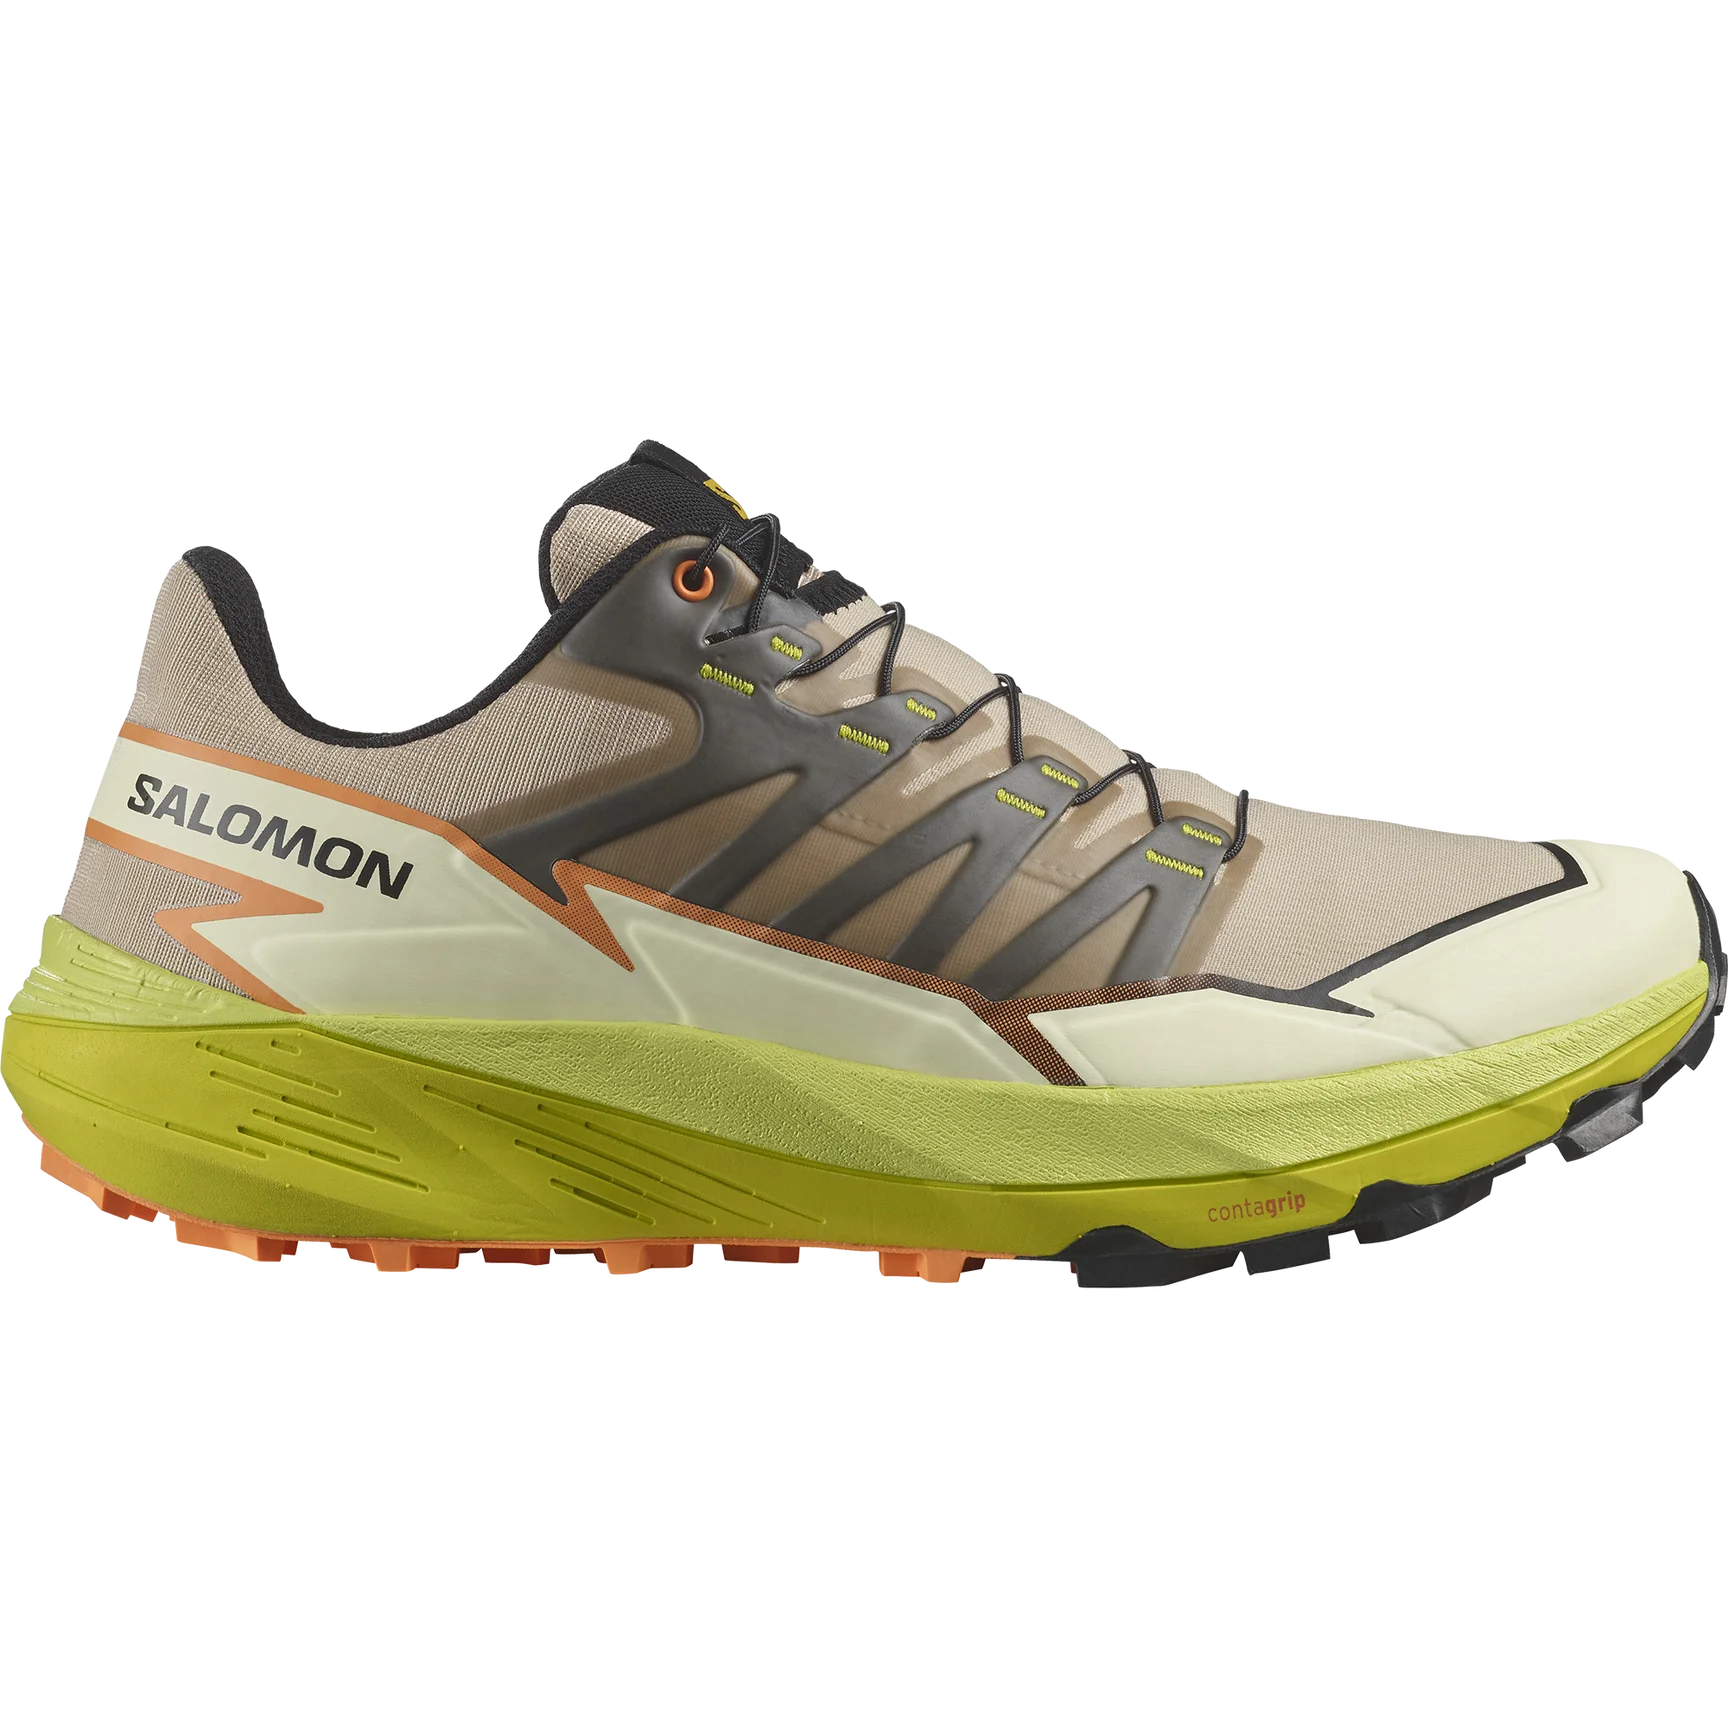 Salomon Thundercross Shoes (Men's) - Safari / Sulphur Spring / Black - Find Your Feet Australia Hobart Launceston Tasmania